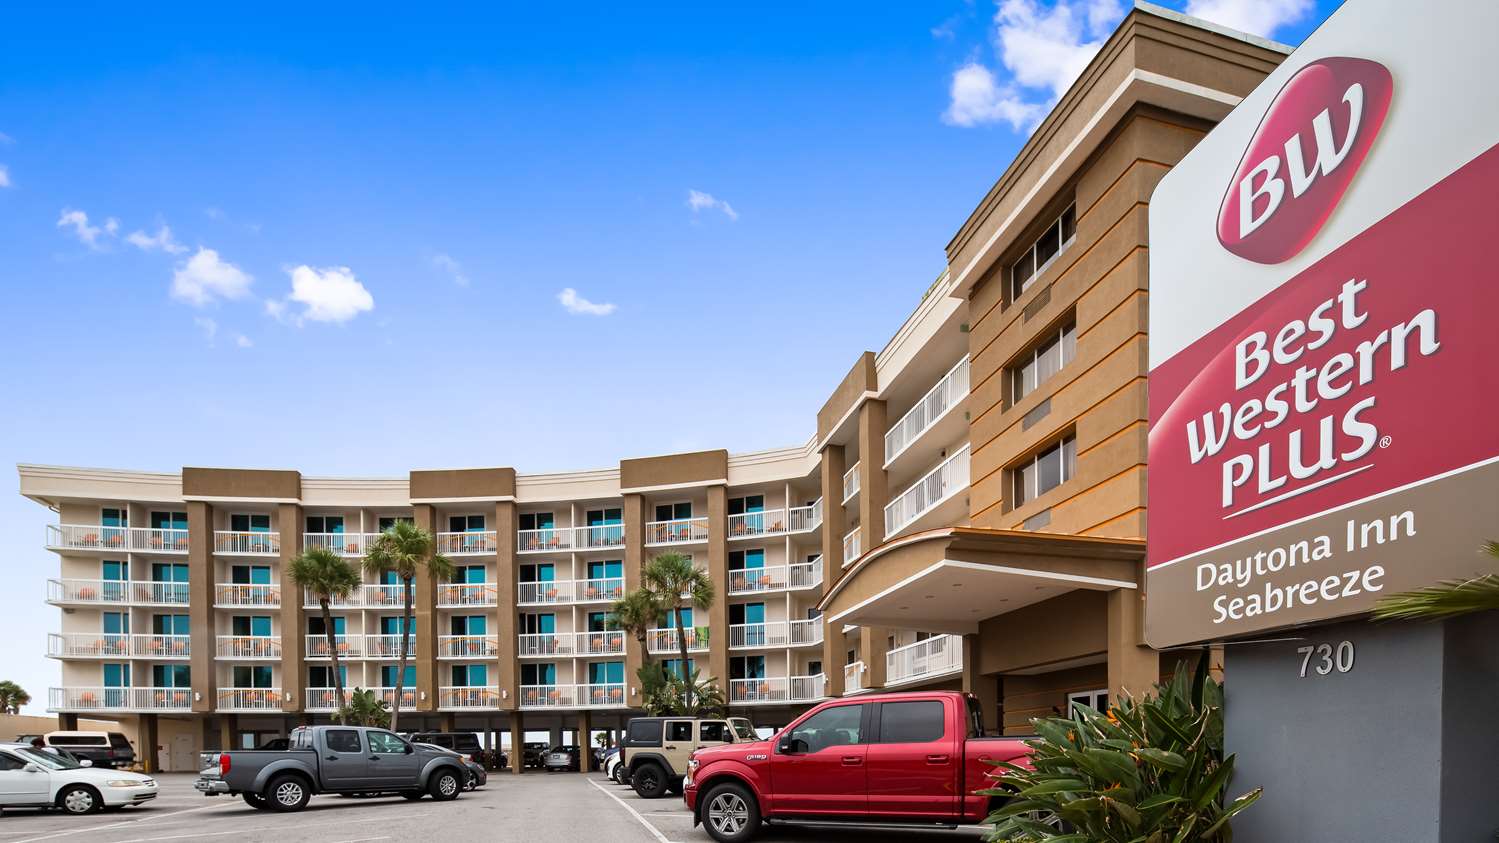 Daytona Beach Hotels| Best Western Plus Daytona Inn Seabreeze Oceanfront